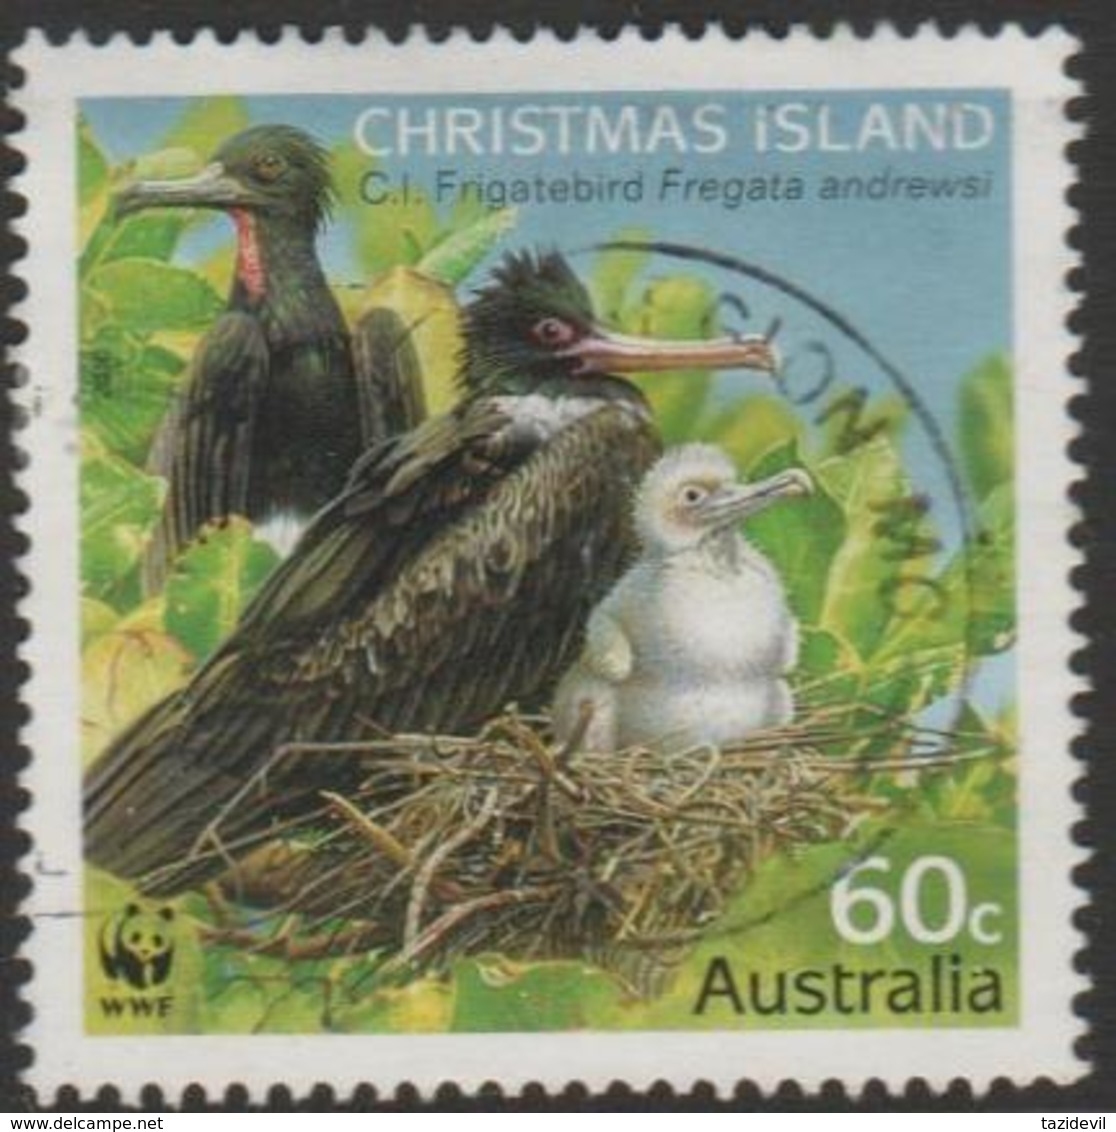 CHRISTMAS ISLAND-USED 2010 60c Frigate Birds - Pair With Chick - Christmas Island